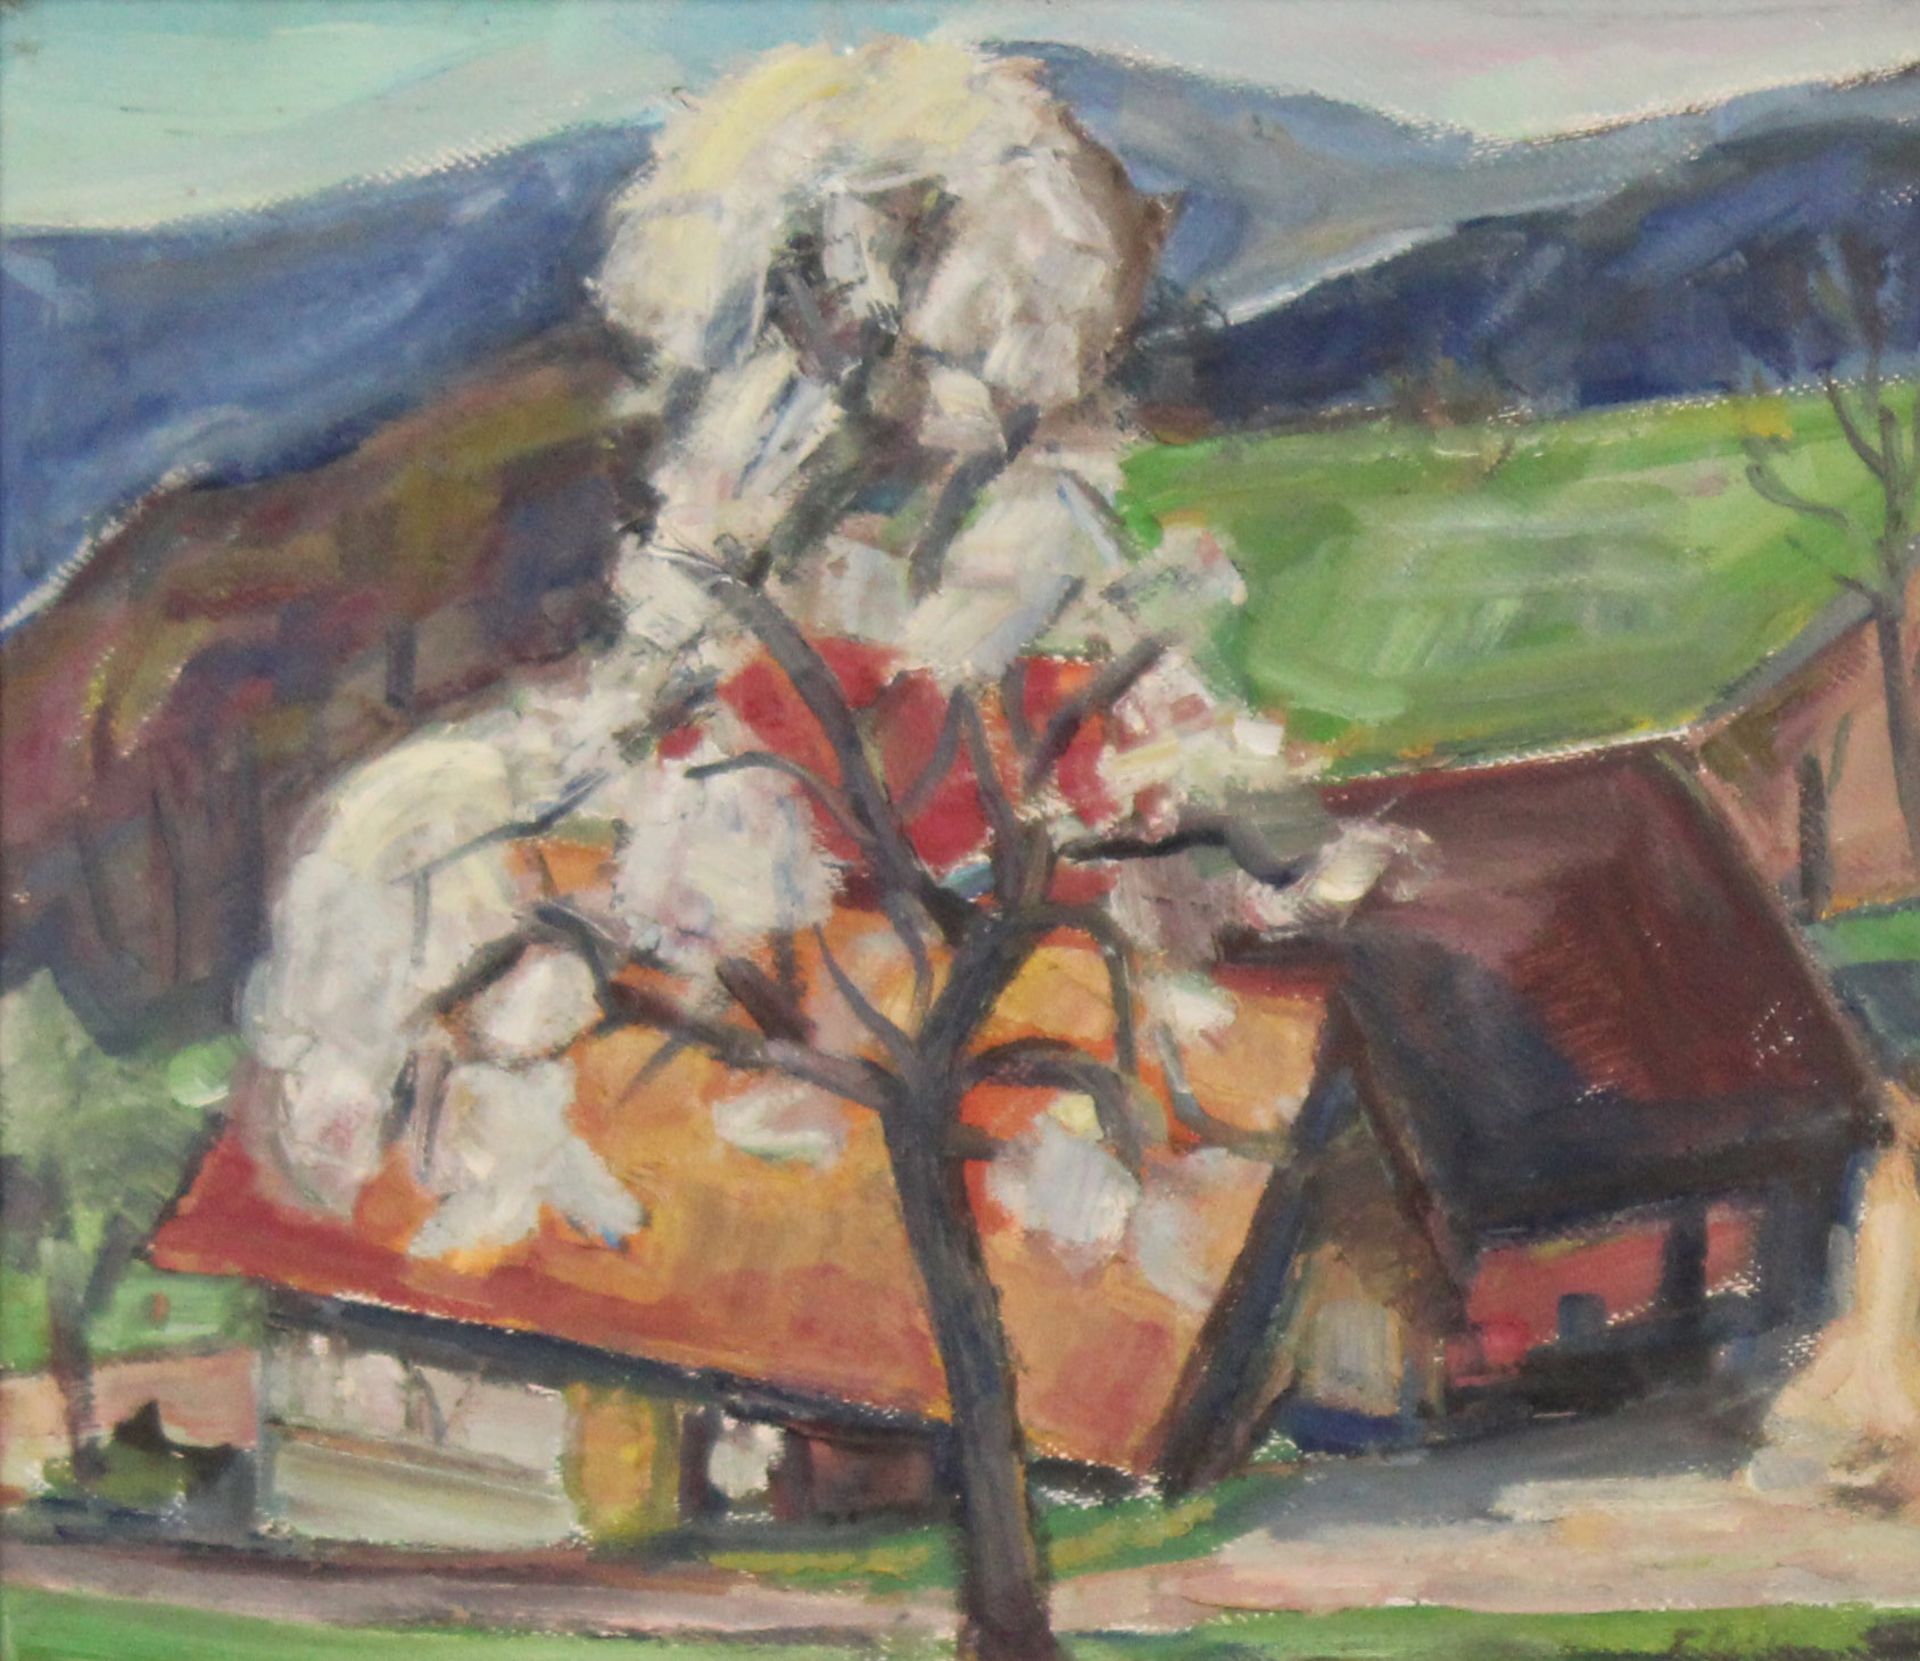 Friedrich OEHLER (1921 - 2001). "Frühling im Schwarzwald''.35 cm x 41 cm. Gemälde. Öl auf Tafel.